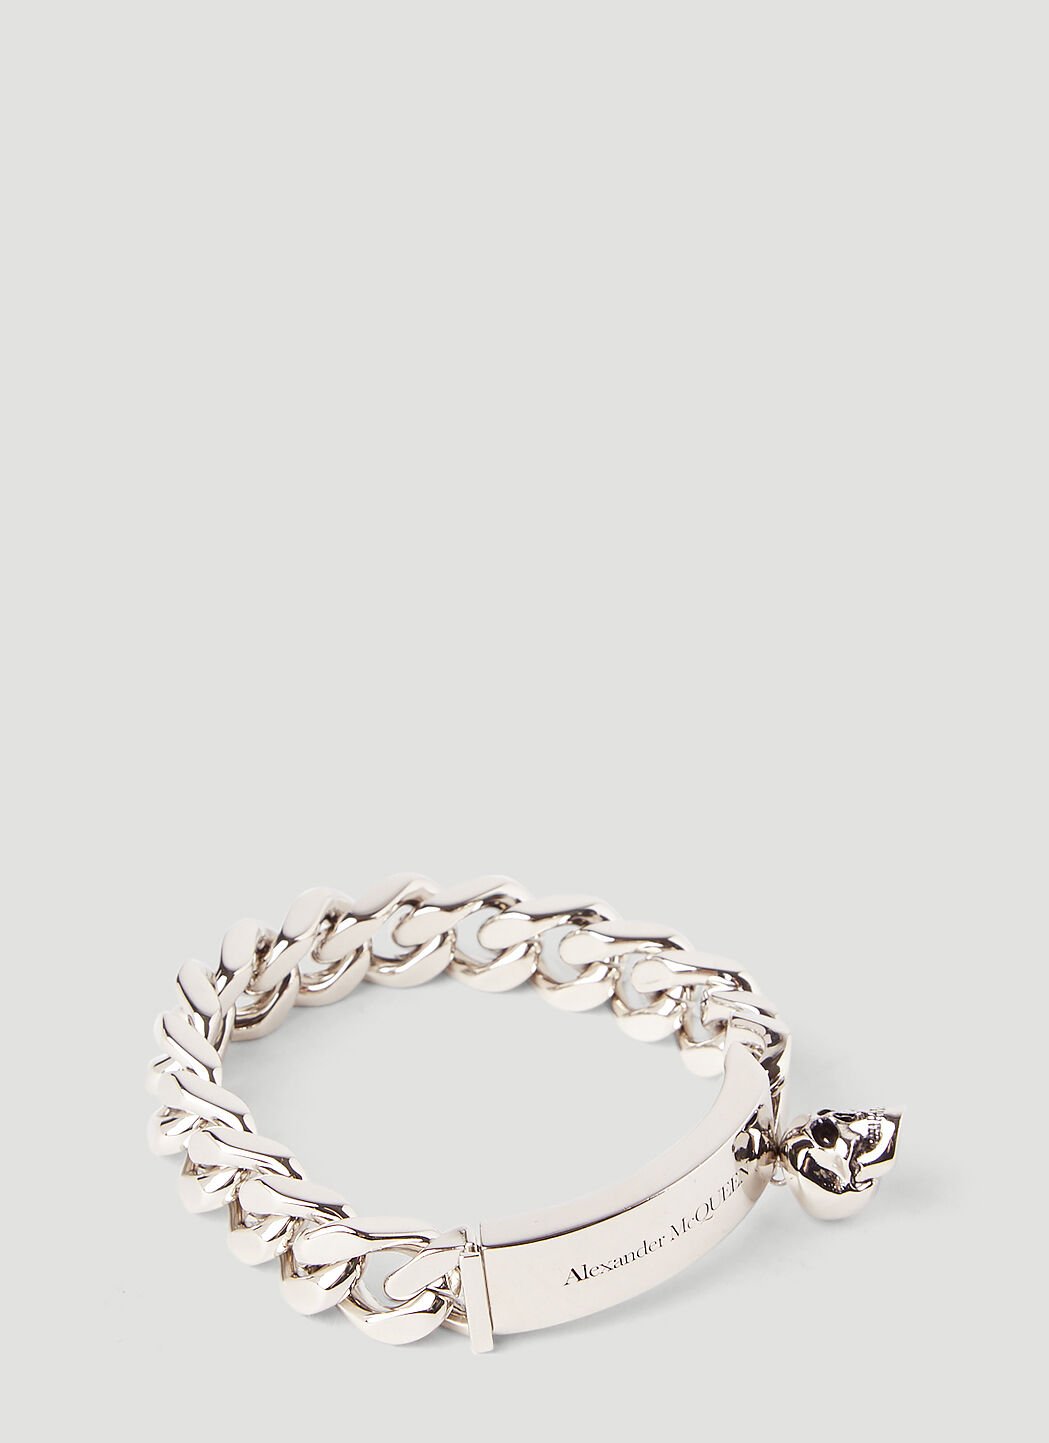 Alexander McQueen Skull Charm Curb-Chain Bracelet 白 amq0149025